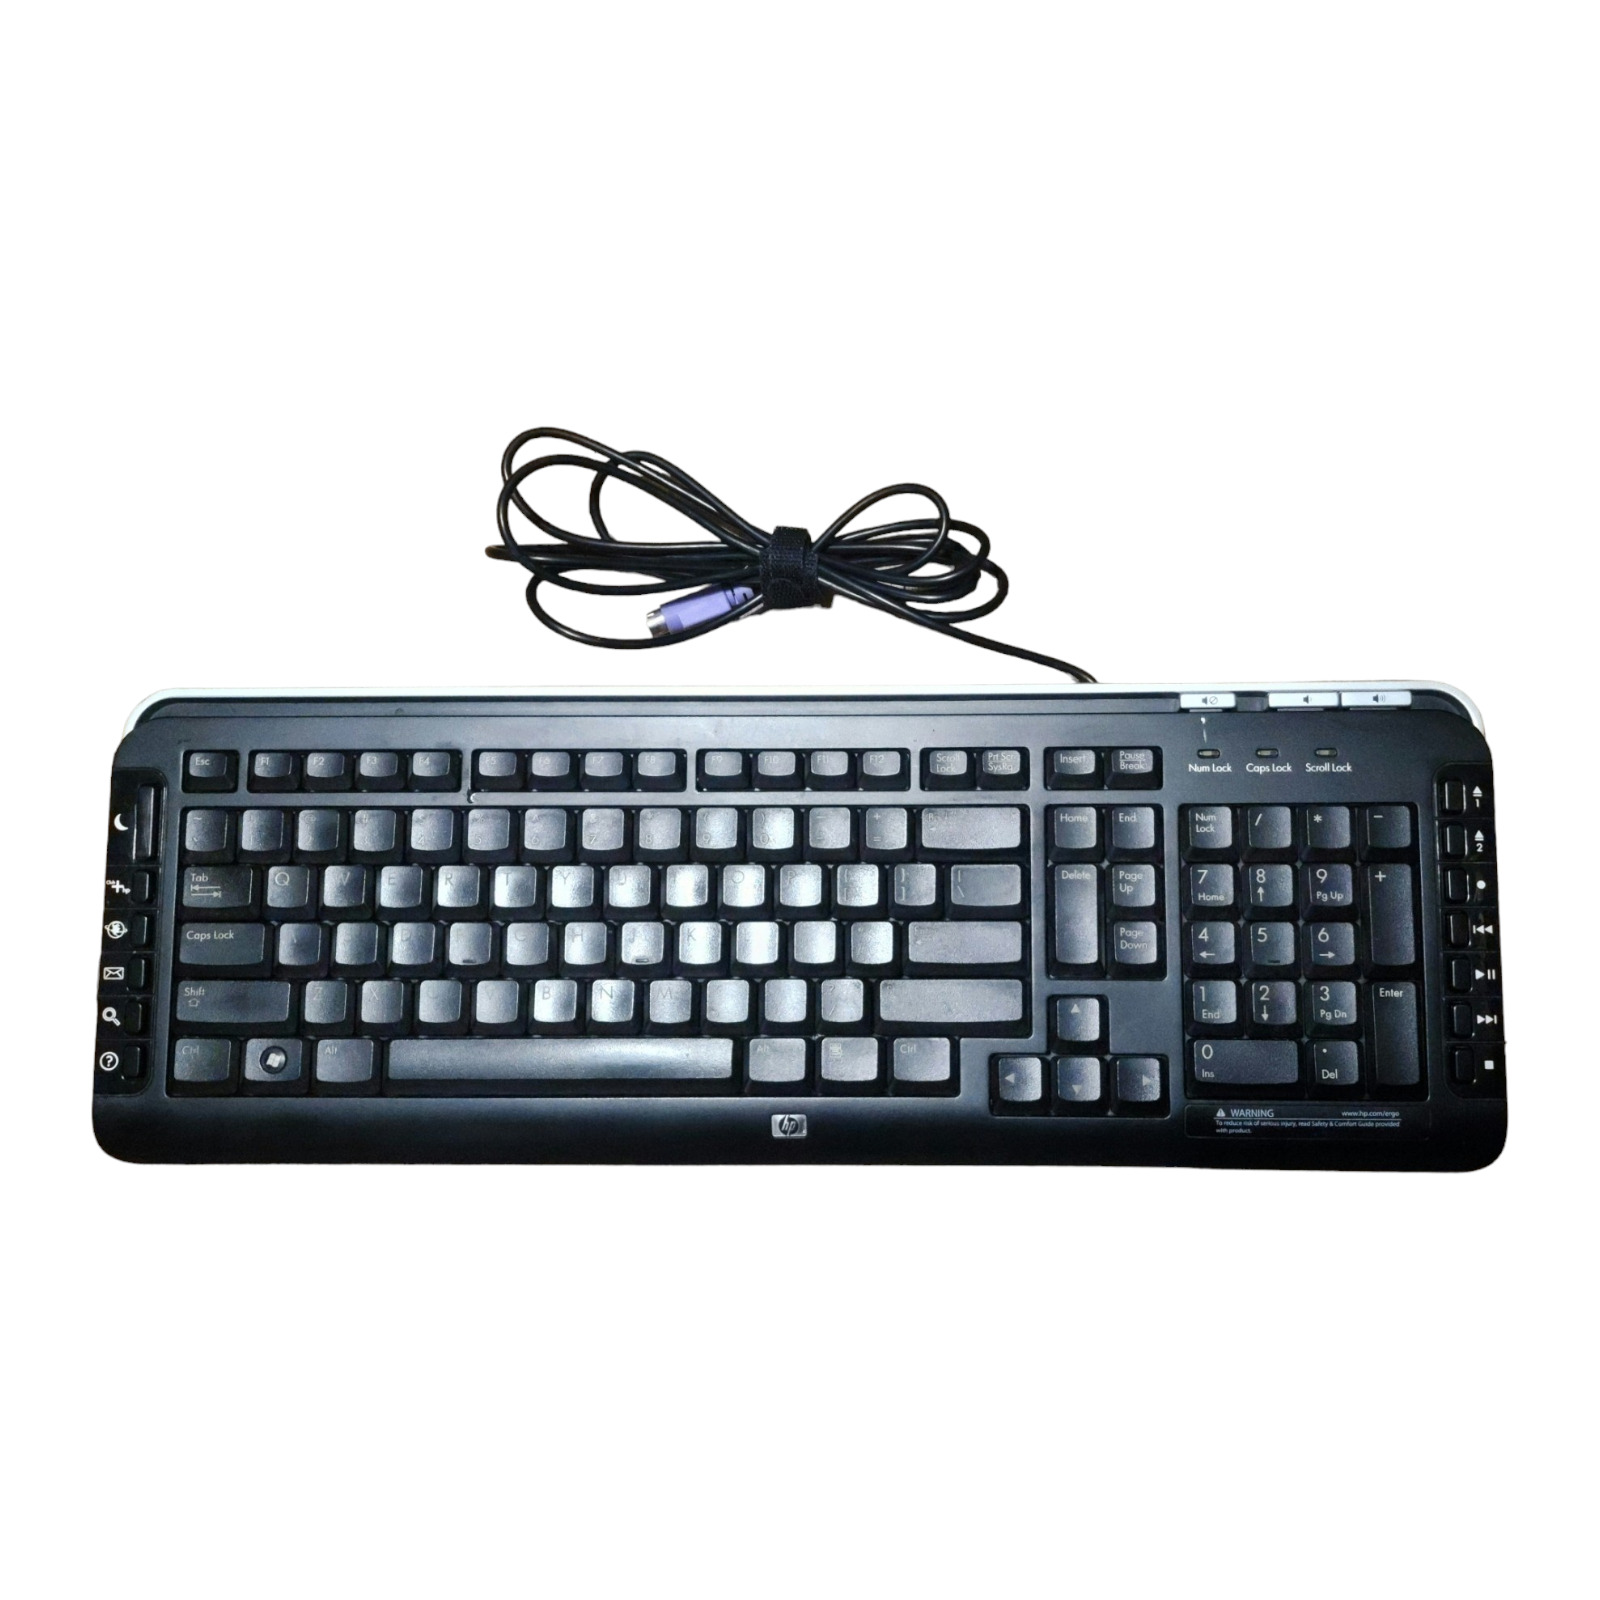 Genuine HP PS/2 Multimedia Keyboard Model: KB-0630 Rev 1.2 PN: 5188-6077